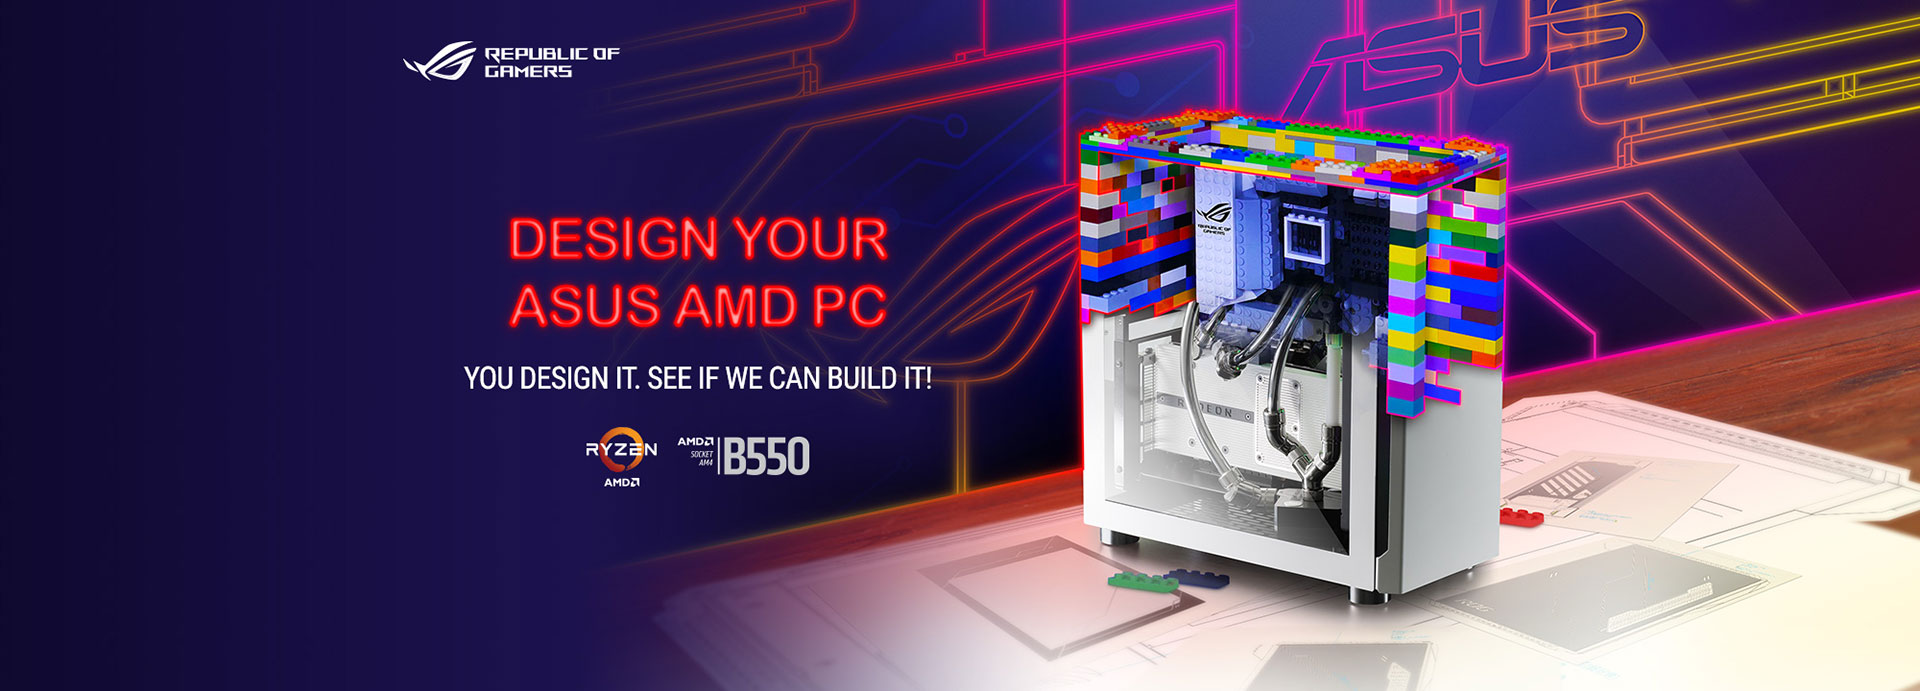 Design your ASUS AMD B550 PC